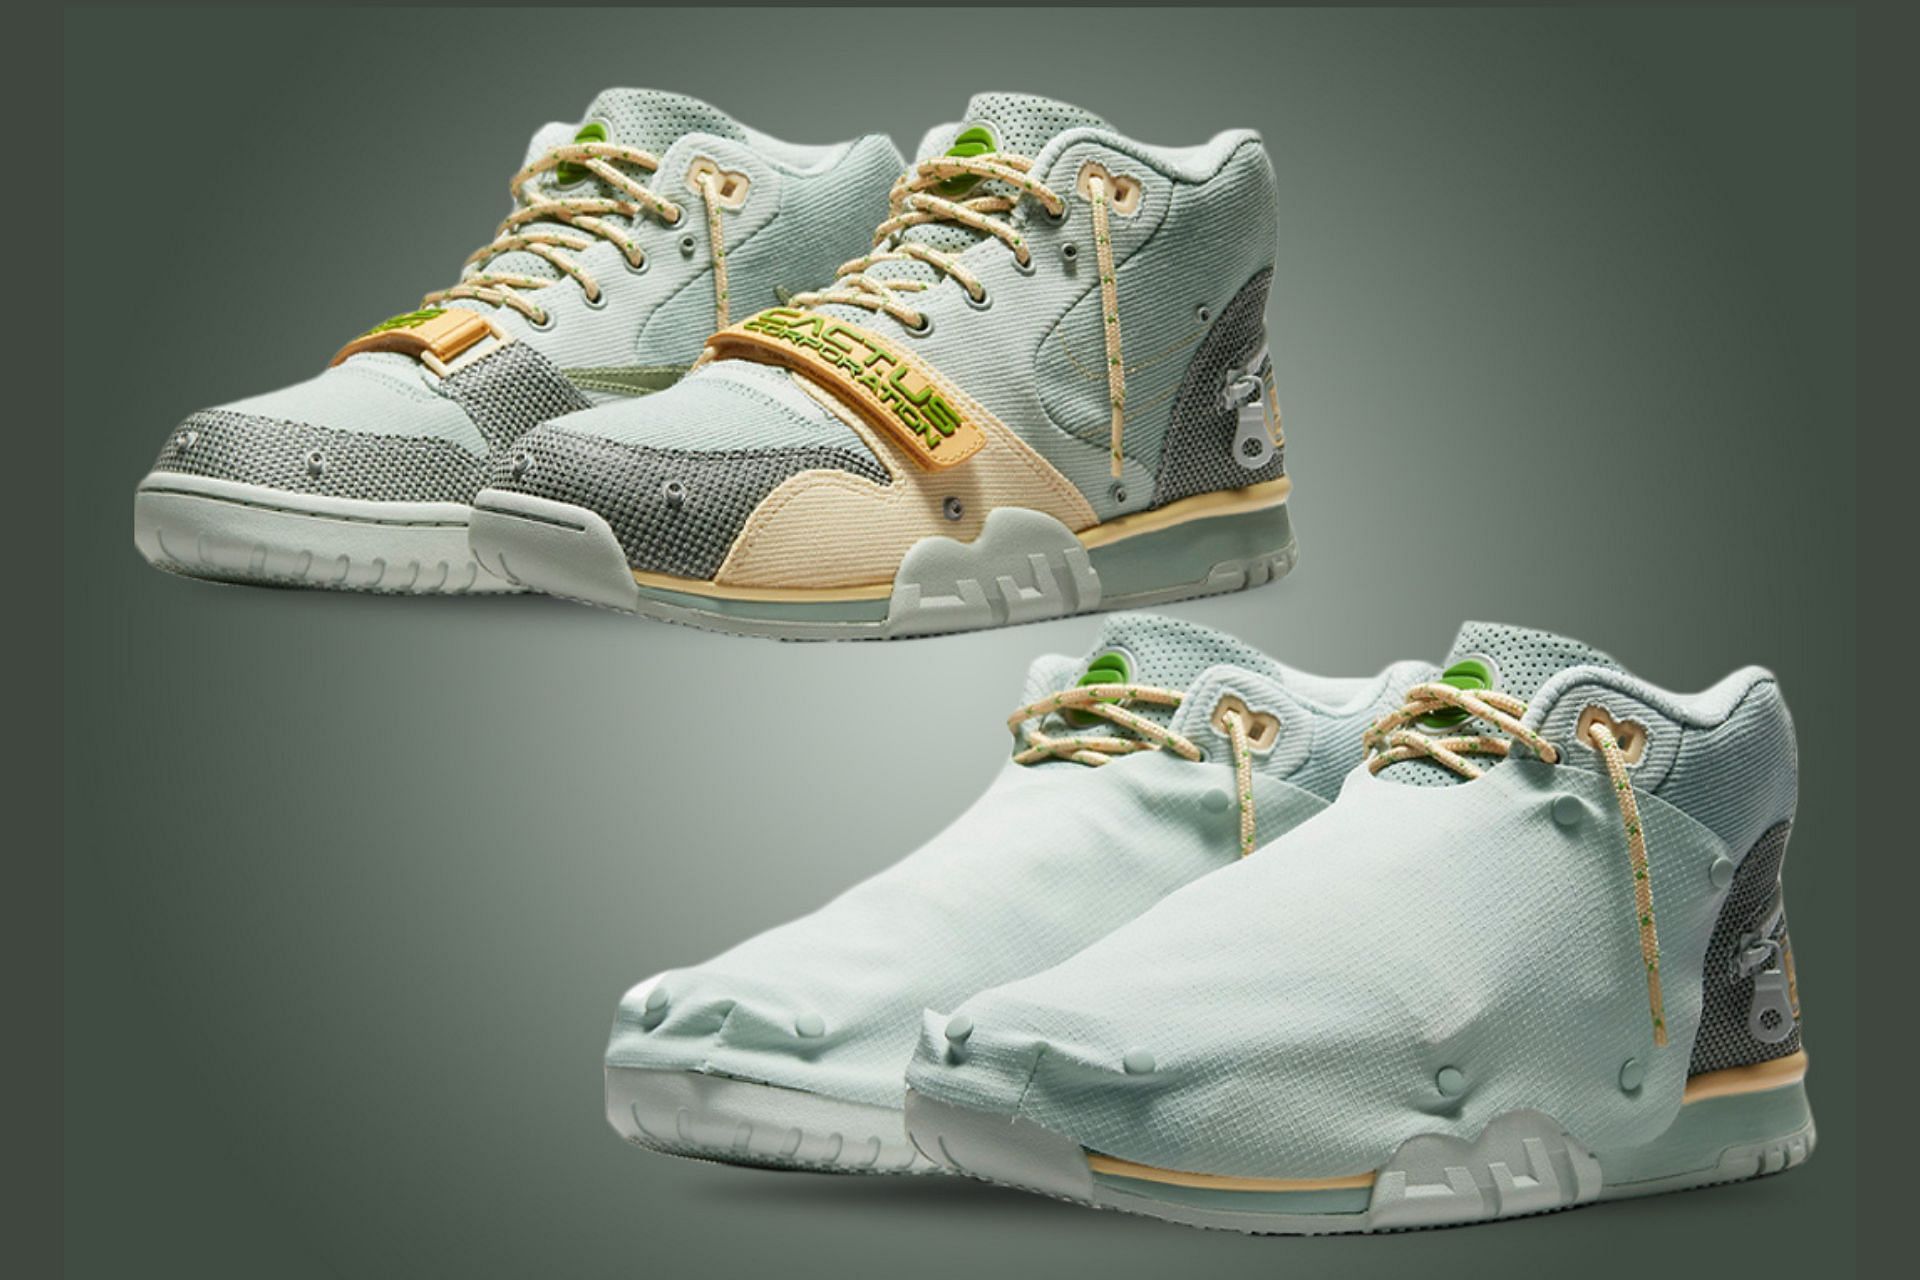 Take a closer look at the Travis Scott x Nike Air Trainer Grey Haze shoes (Image via Nike)